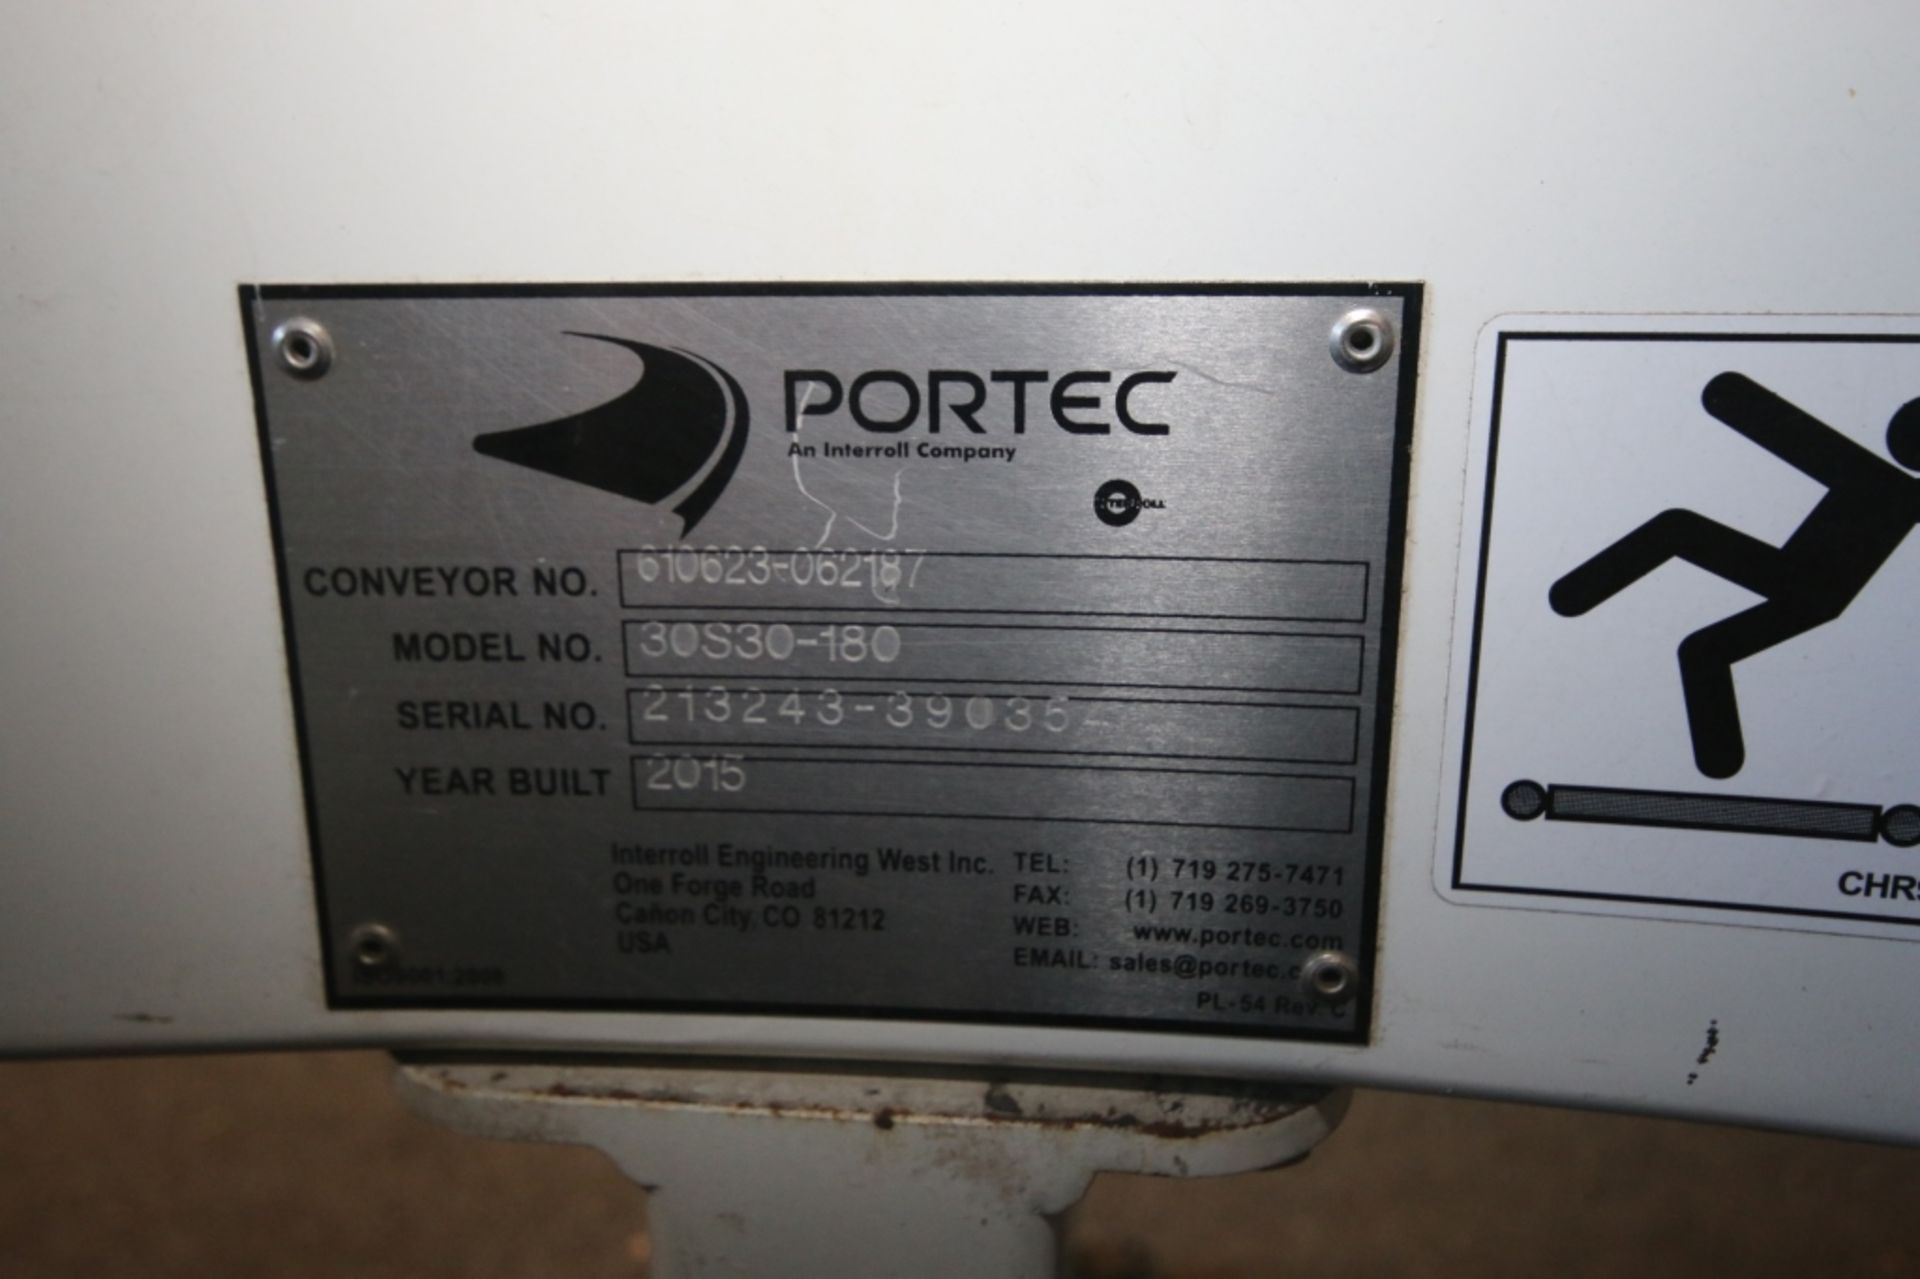 2015 Portec 180 Degree Conveyor, Model - Image 4 of 5